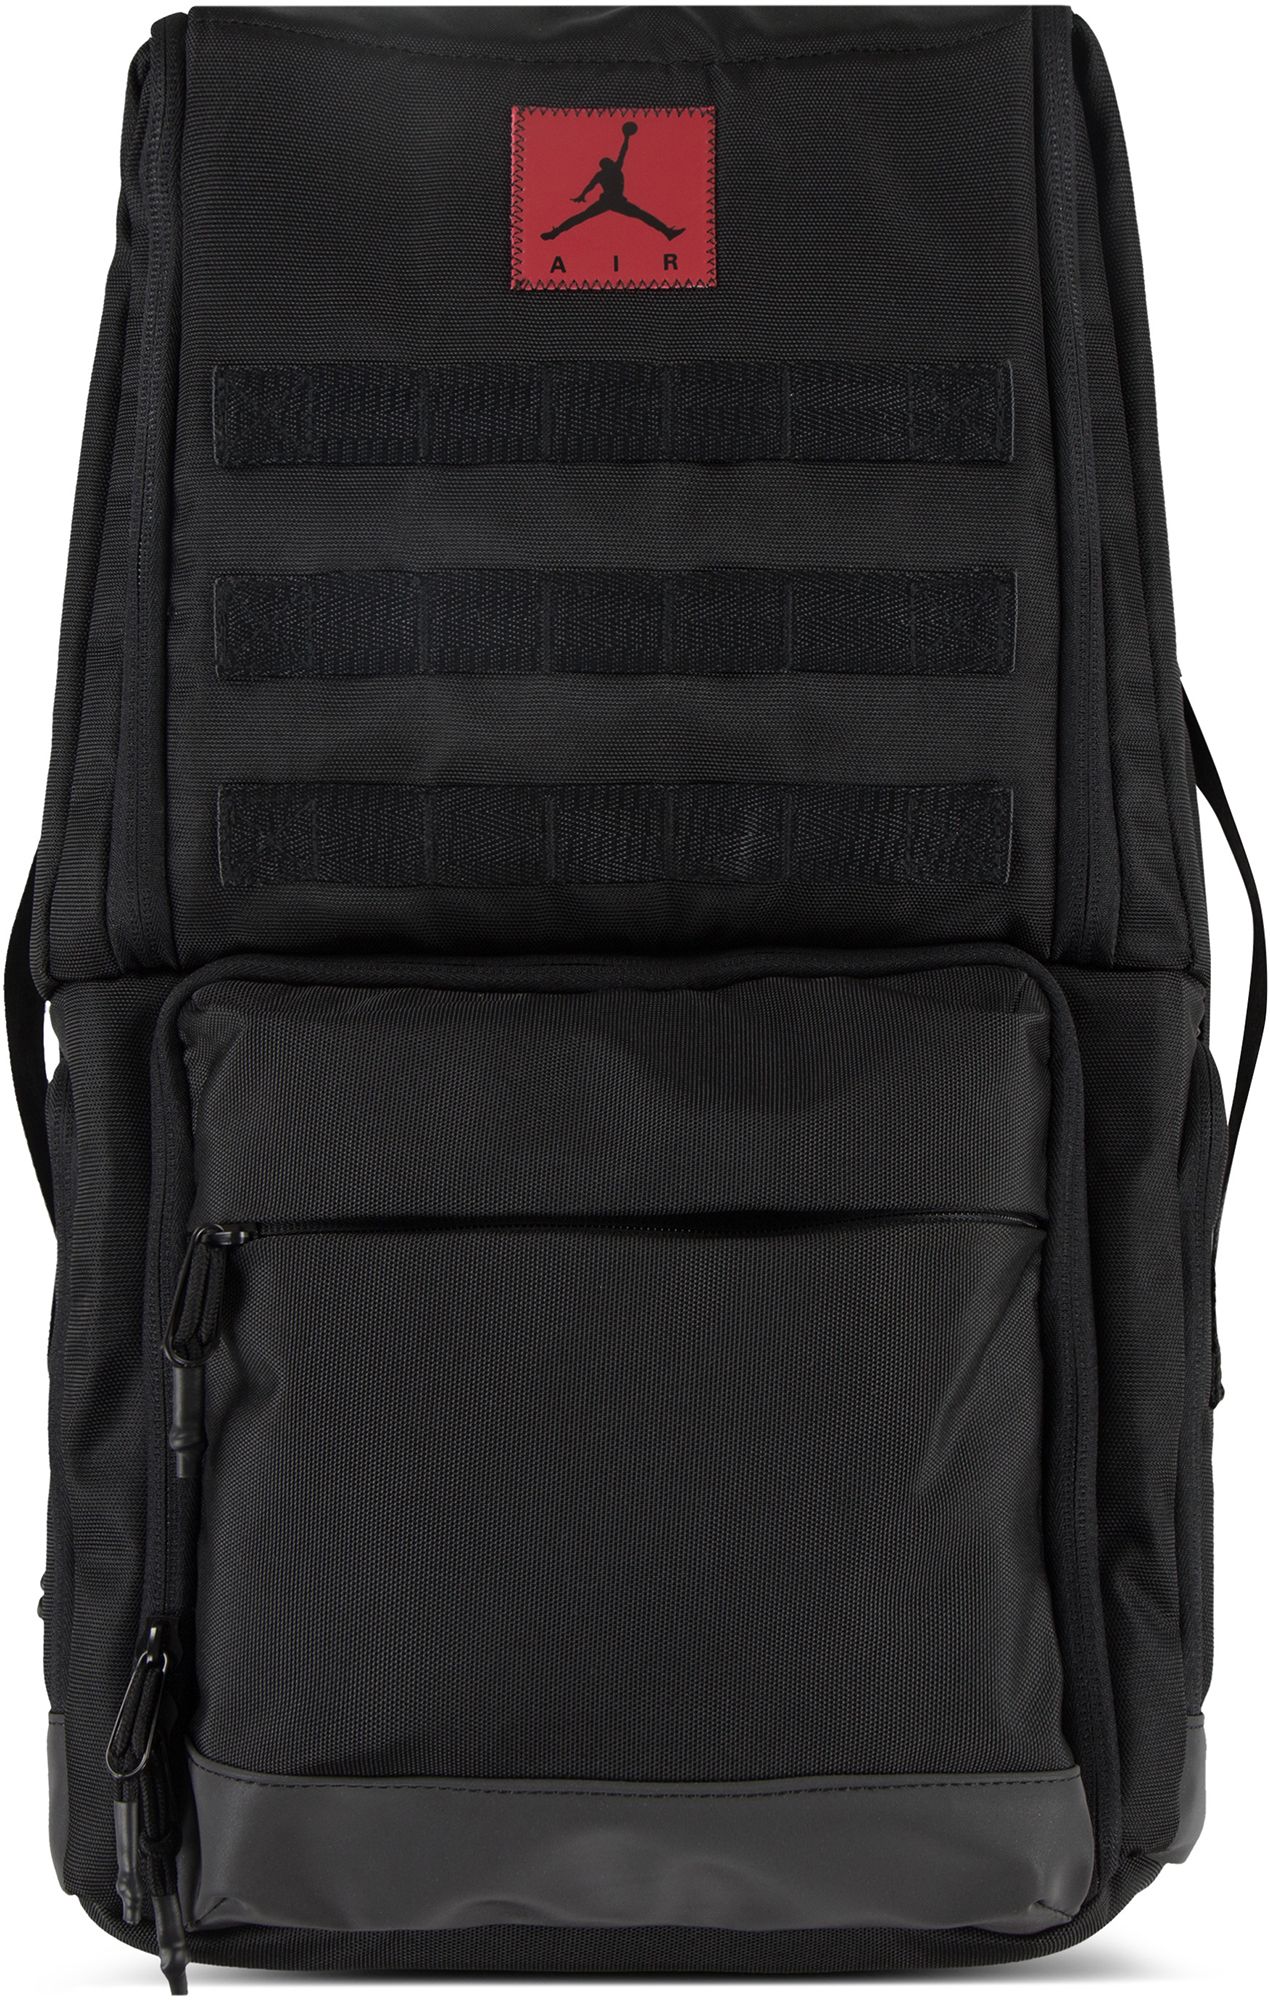 Jordan Collectors Backpack